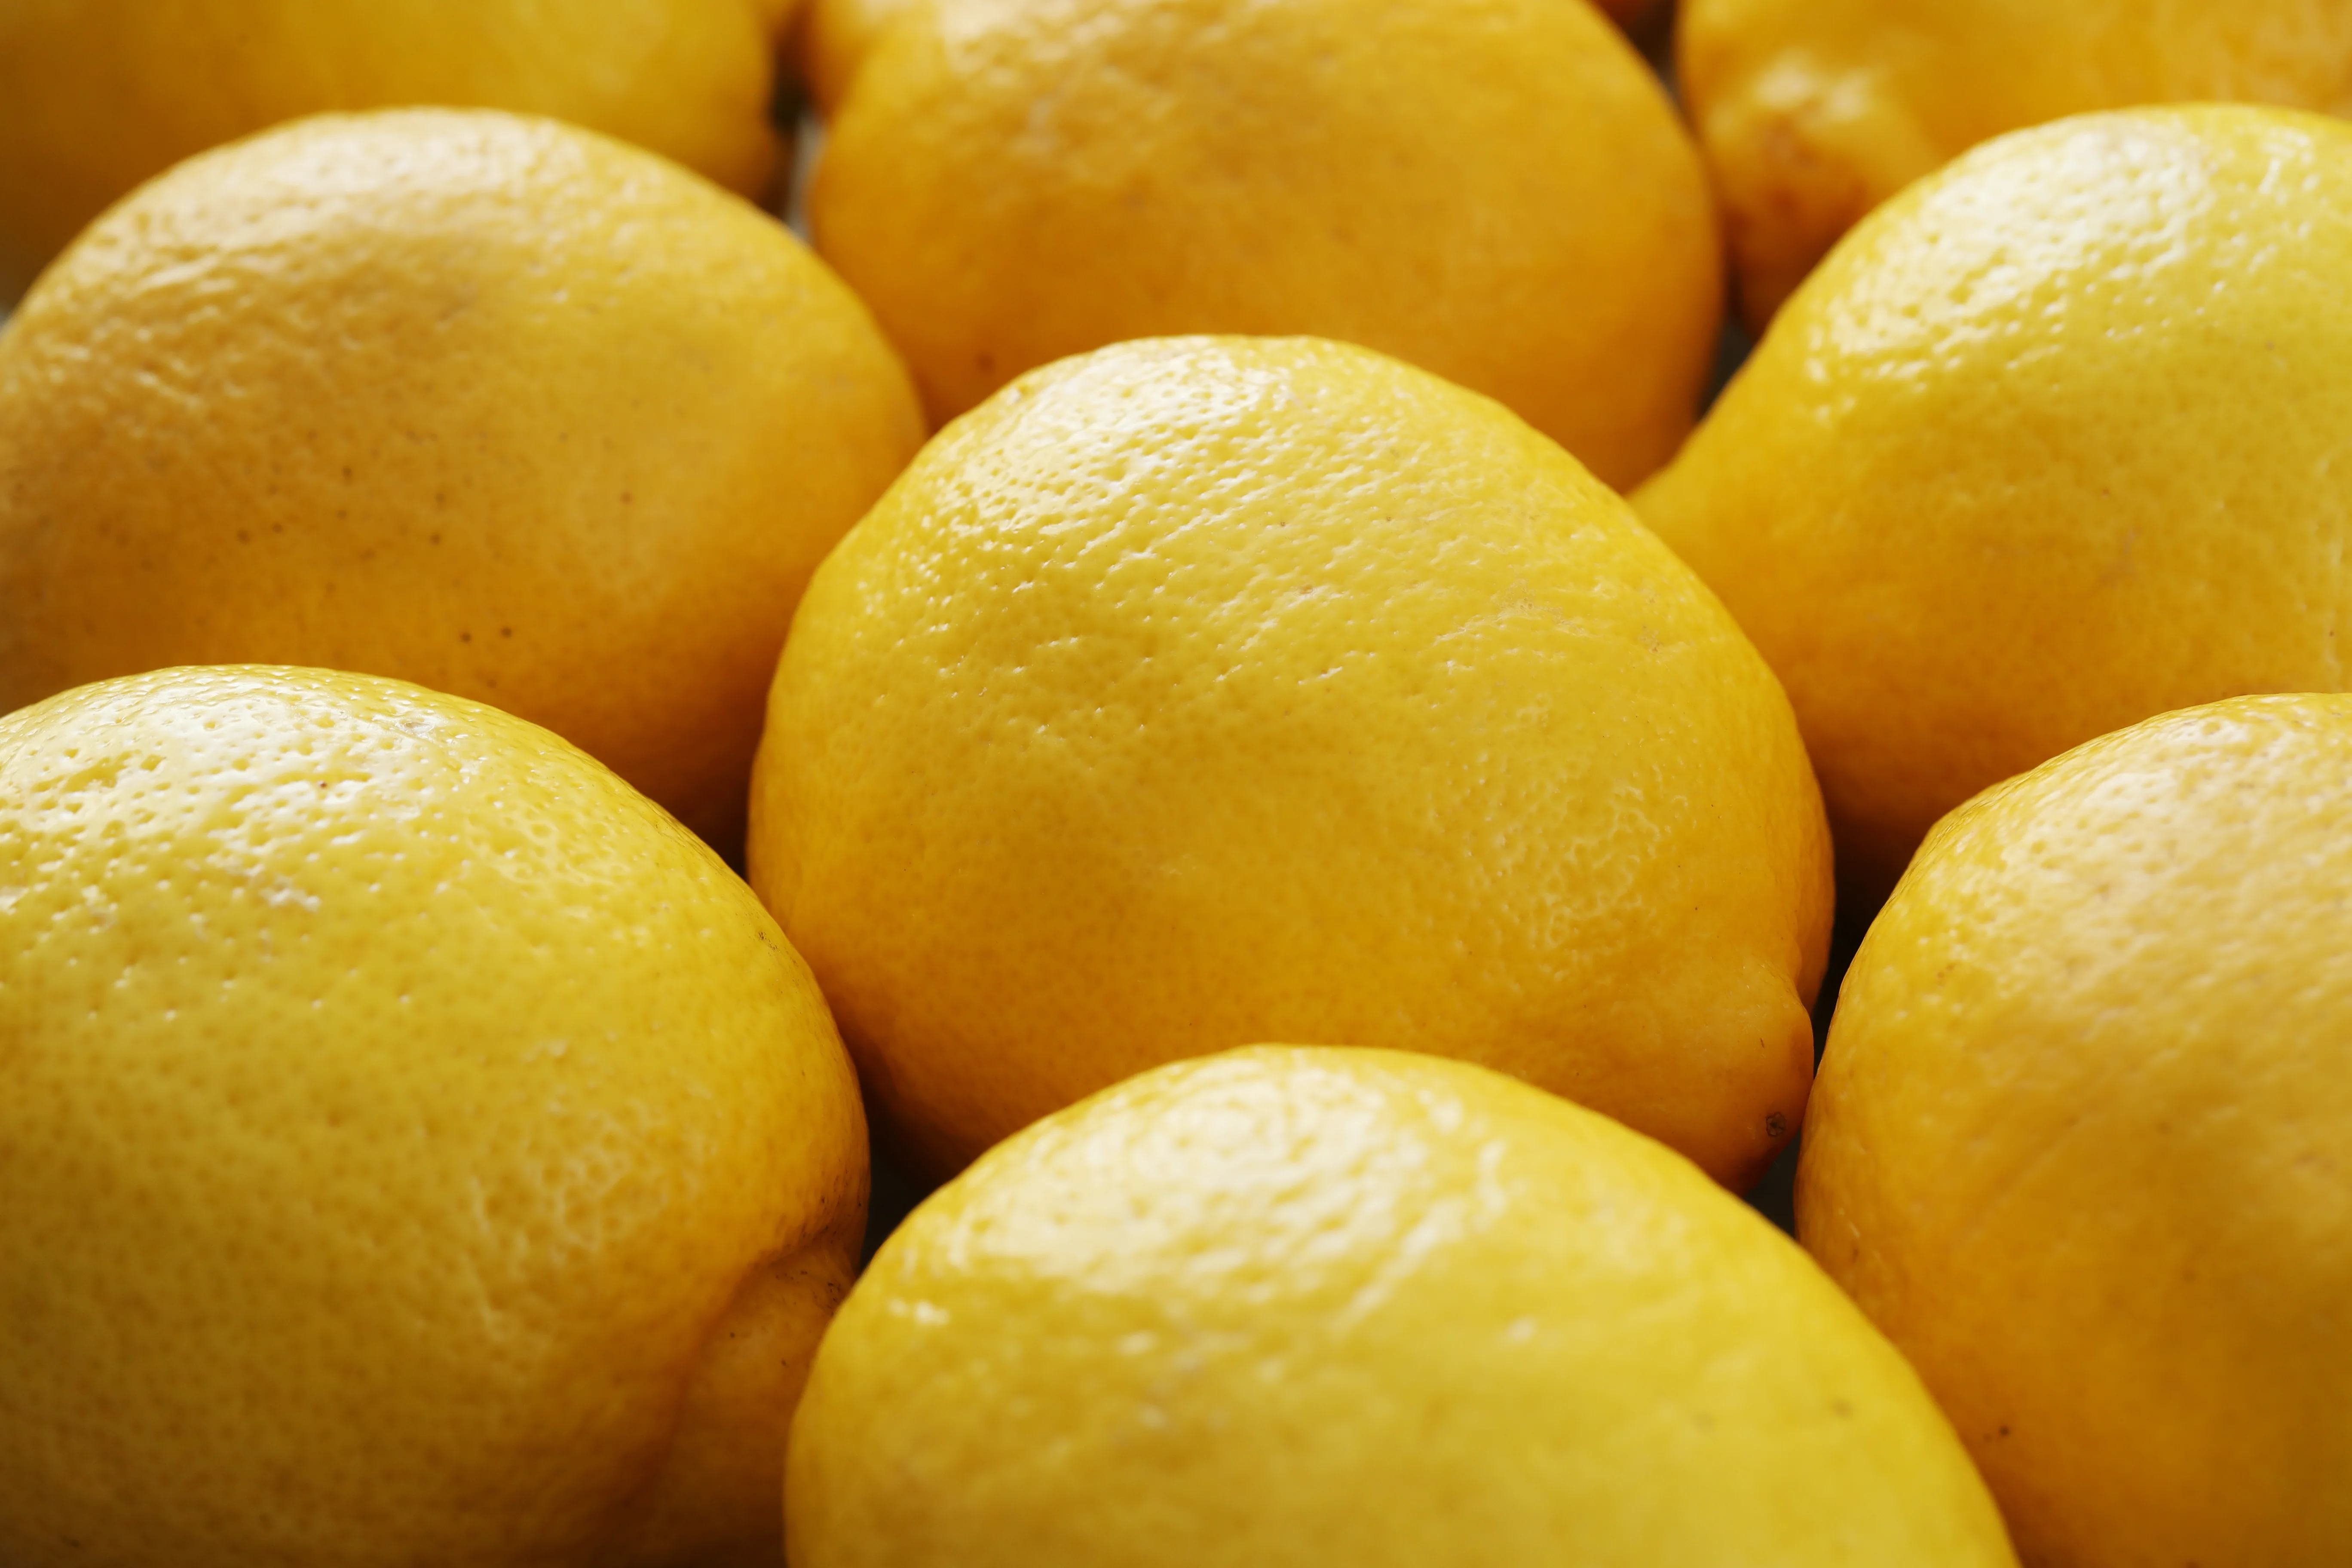 a pile of lemons